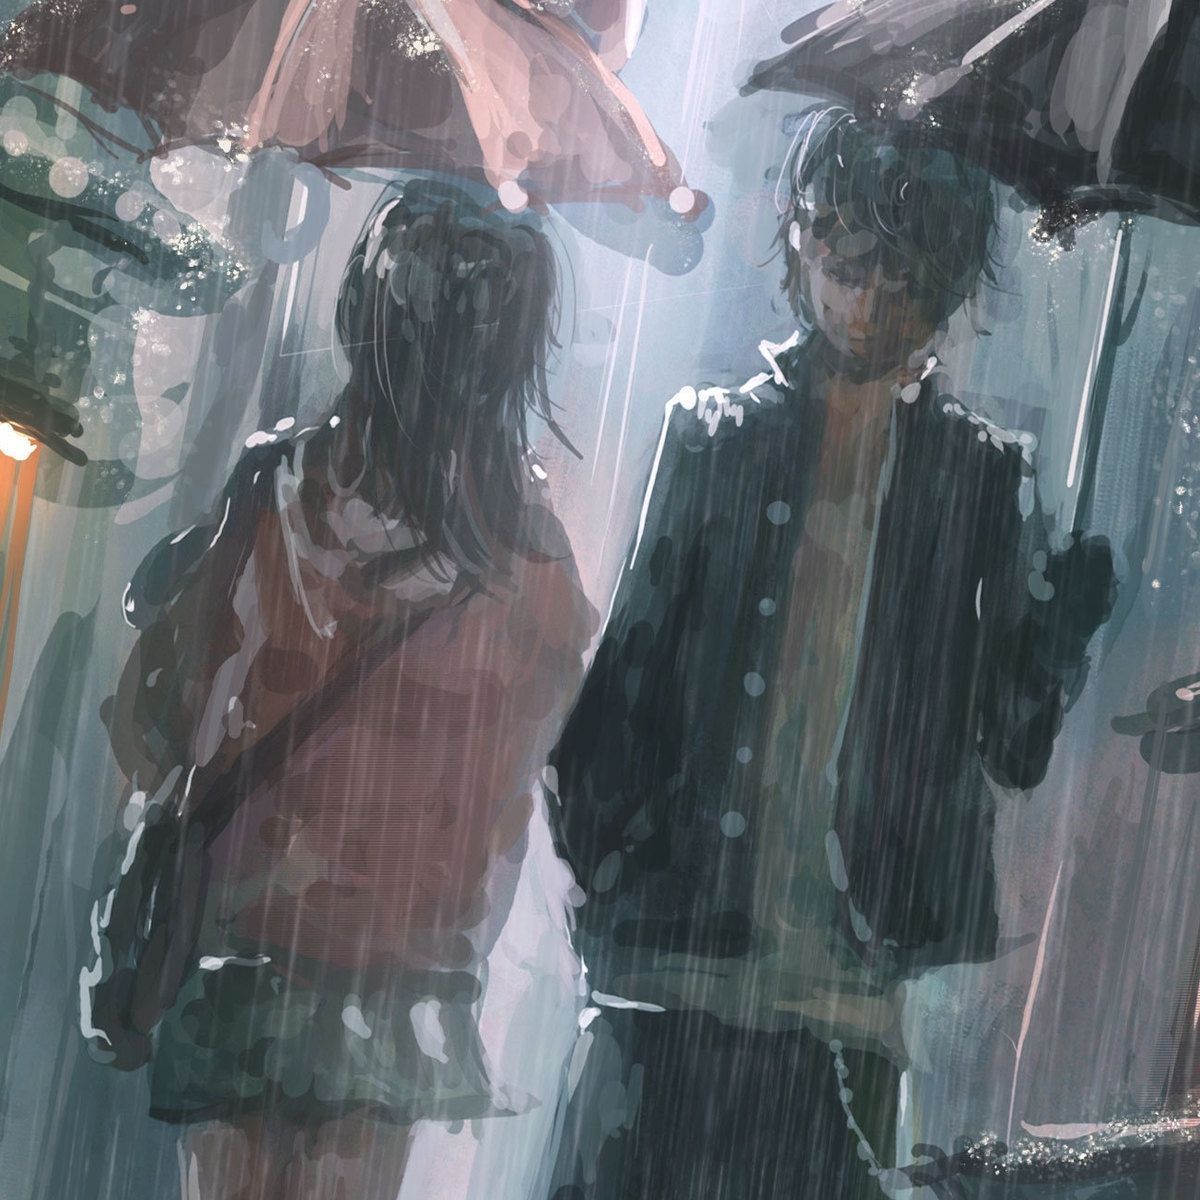 atey ghailan on X Just wanted to paint something last night tied to rain  after work rain city urban monochrome anime art artwork  httpstcorLGdoxHjoQ  X